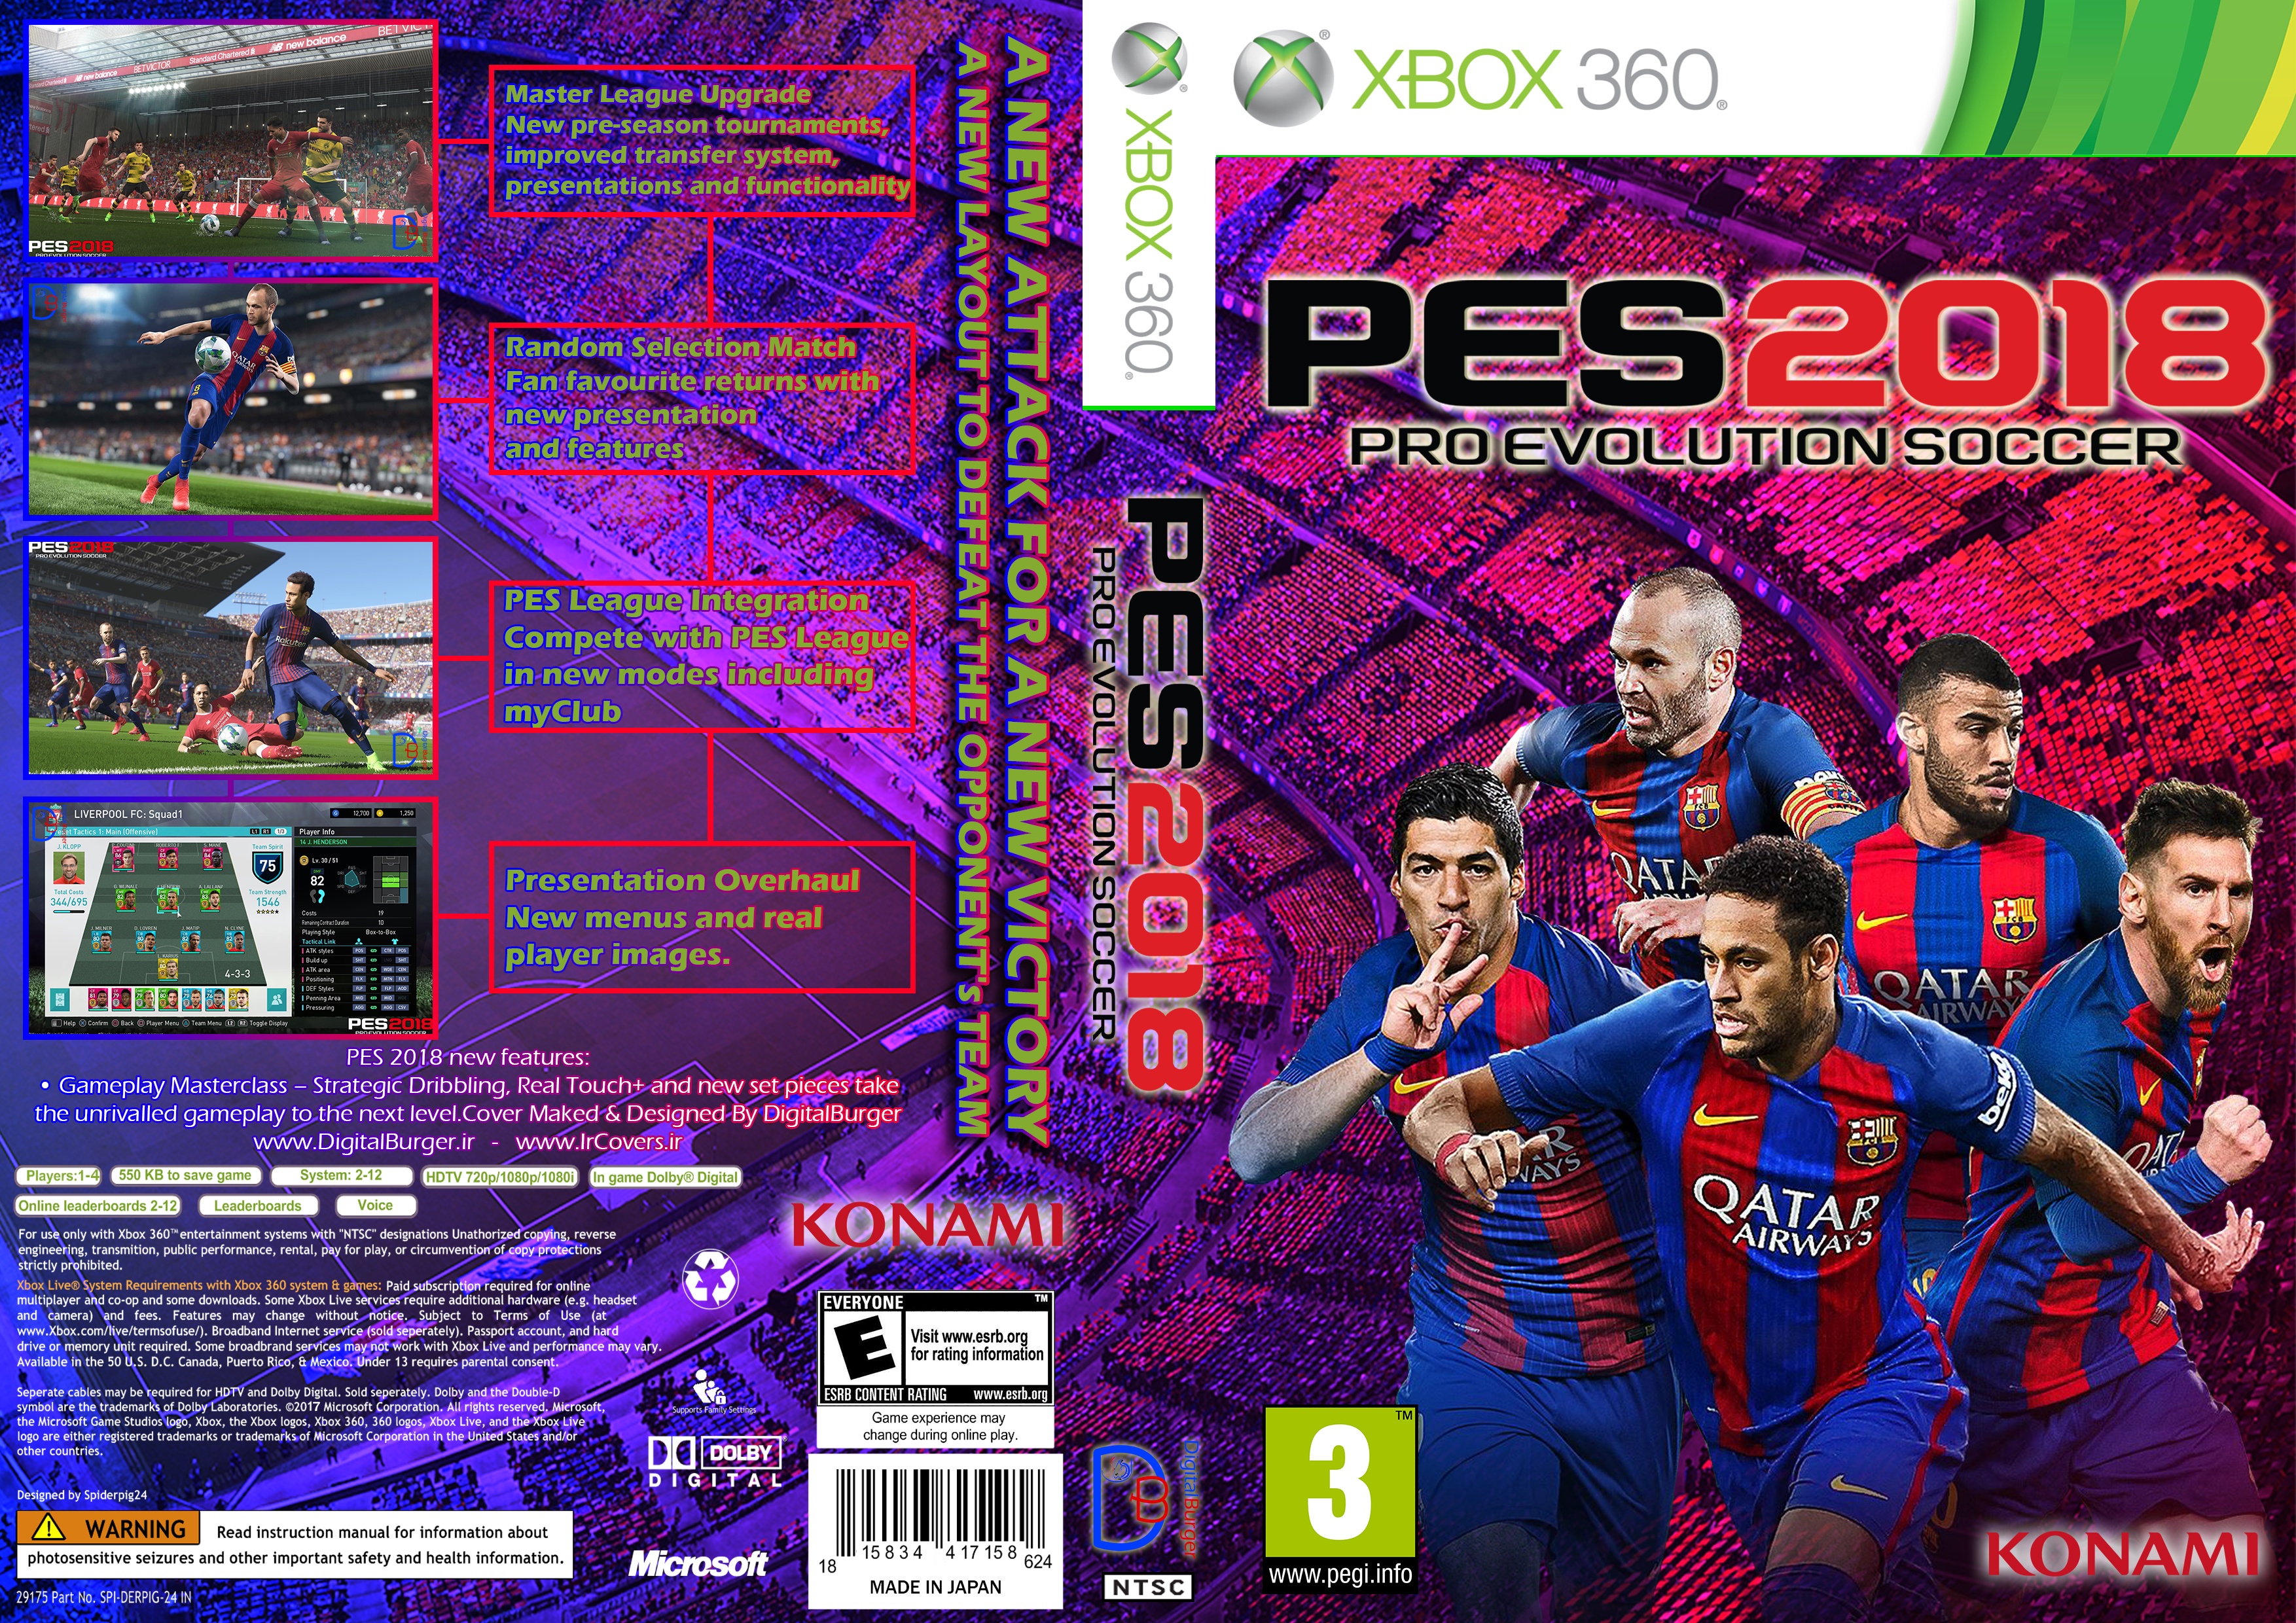 Pro Evolution Soccer 2018 (PES 2018) box cover